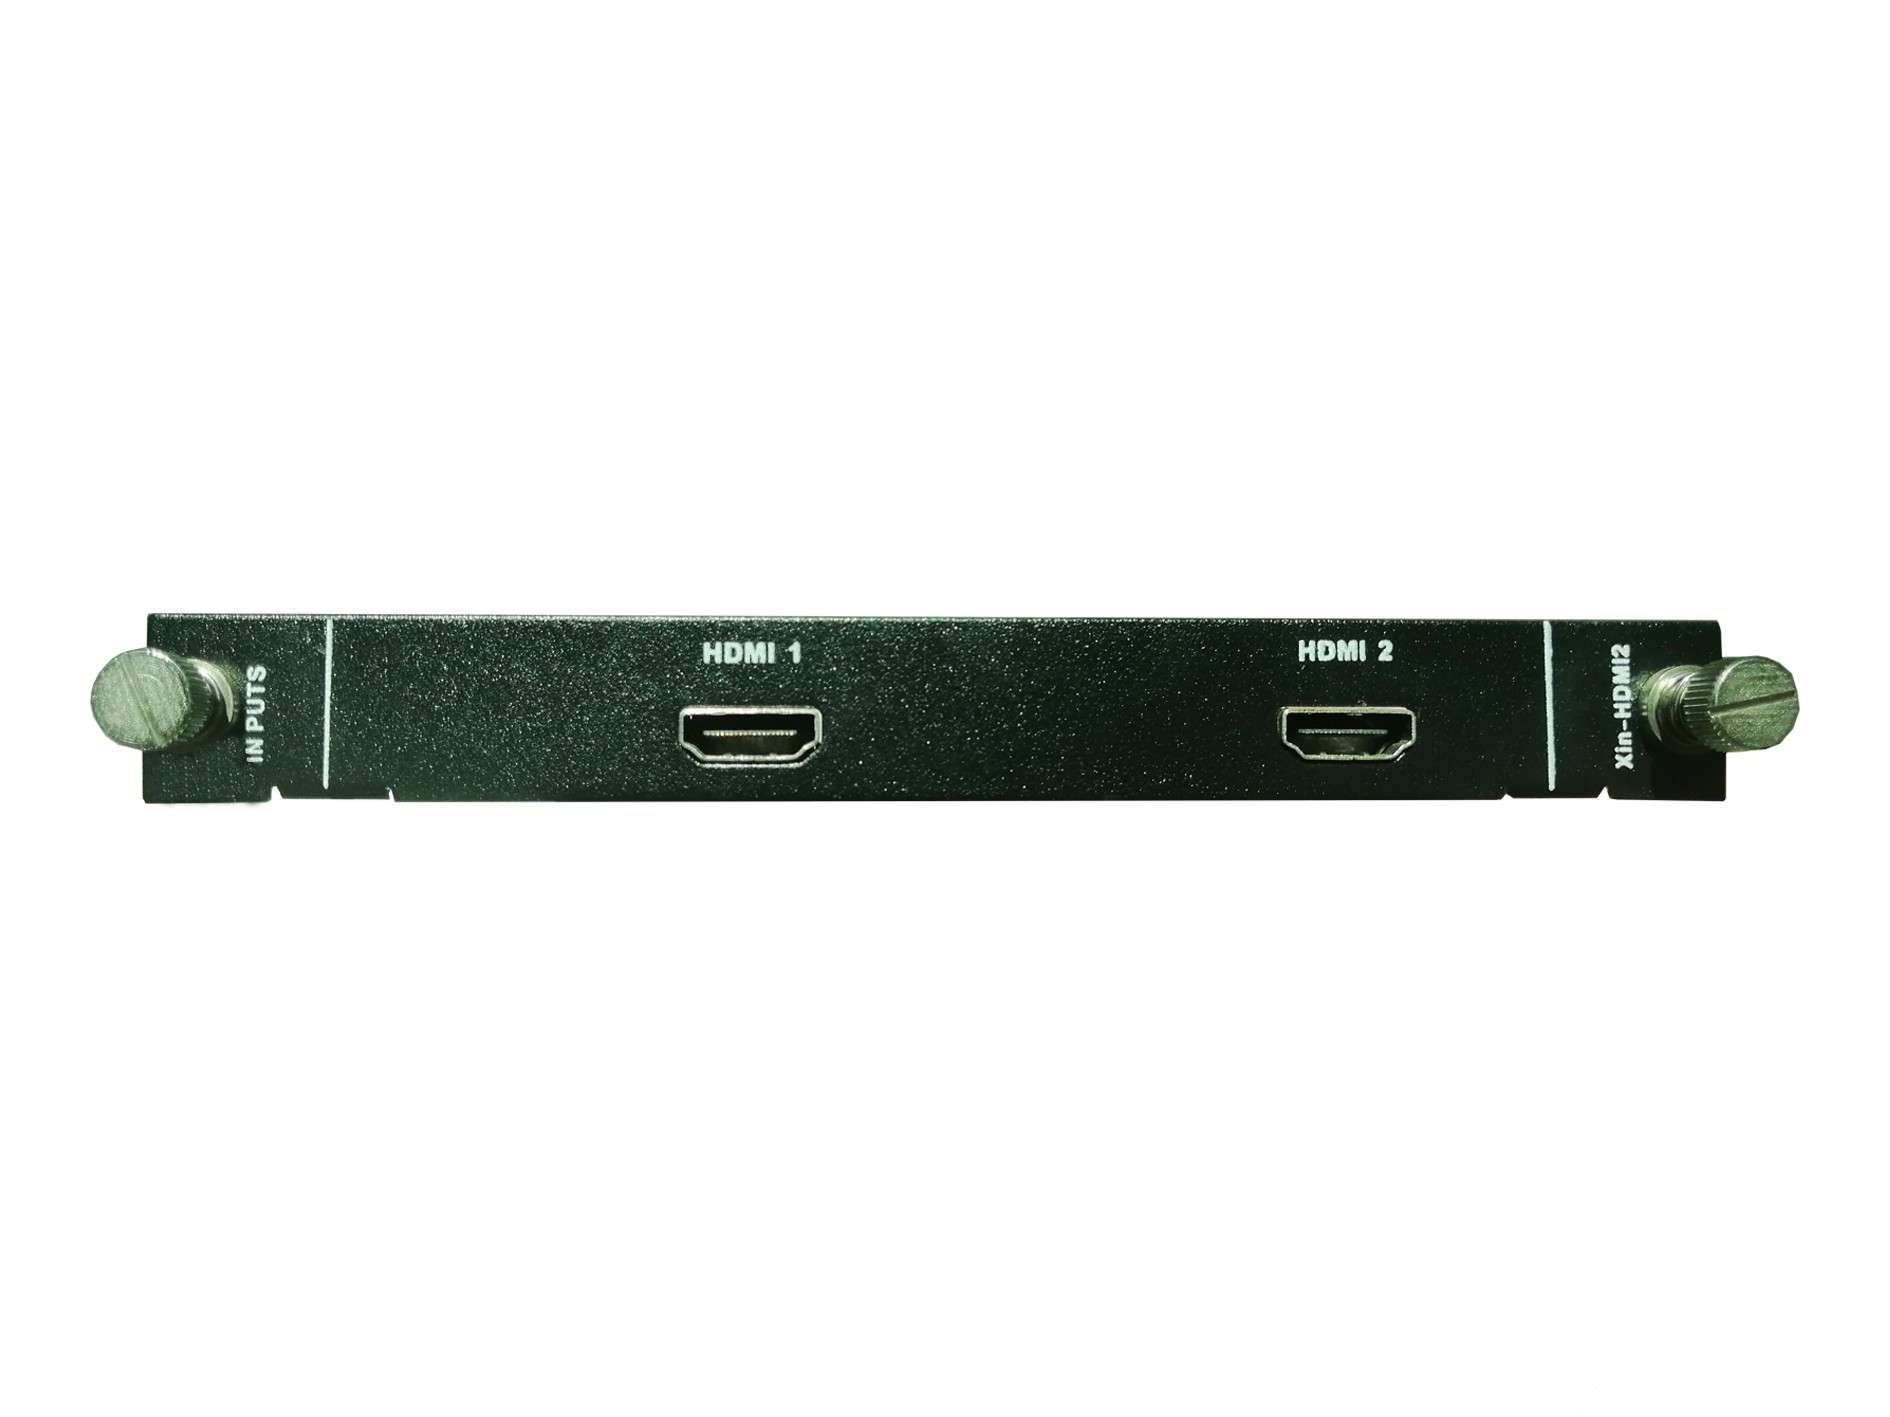 2 x HDMI input boards